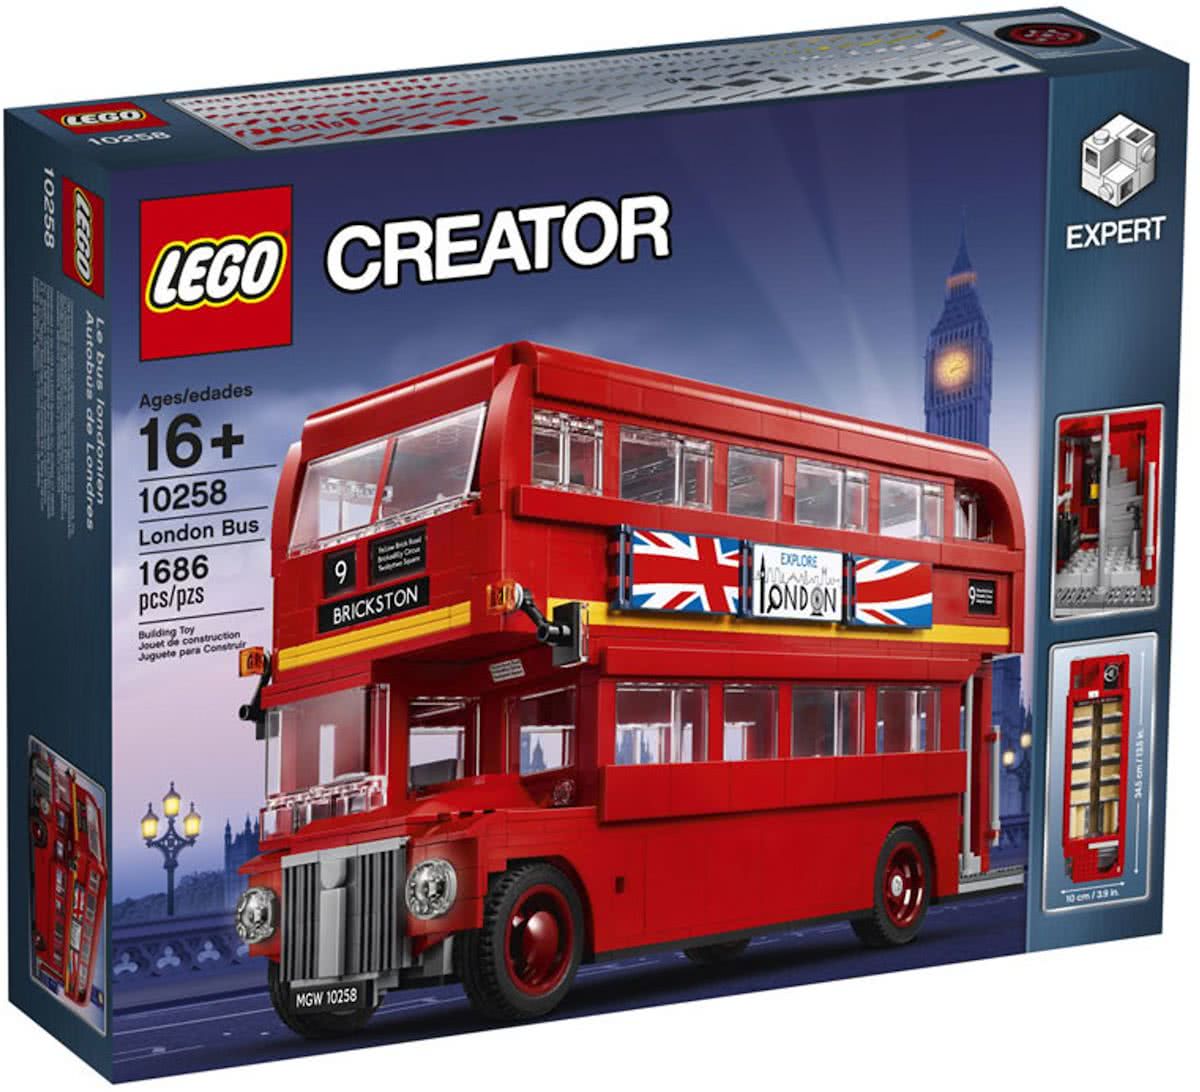 10258 LEGO Creator London Bus